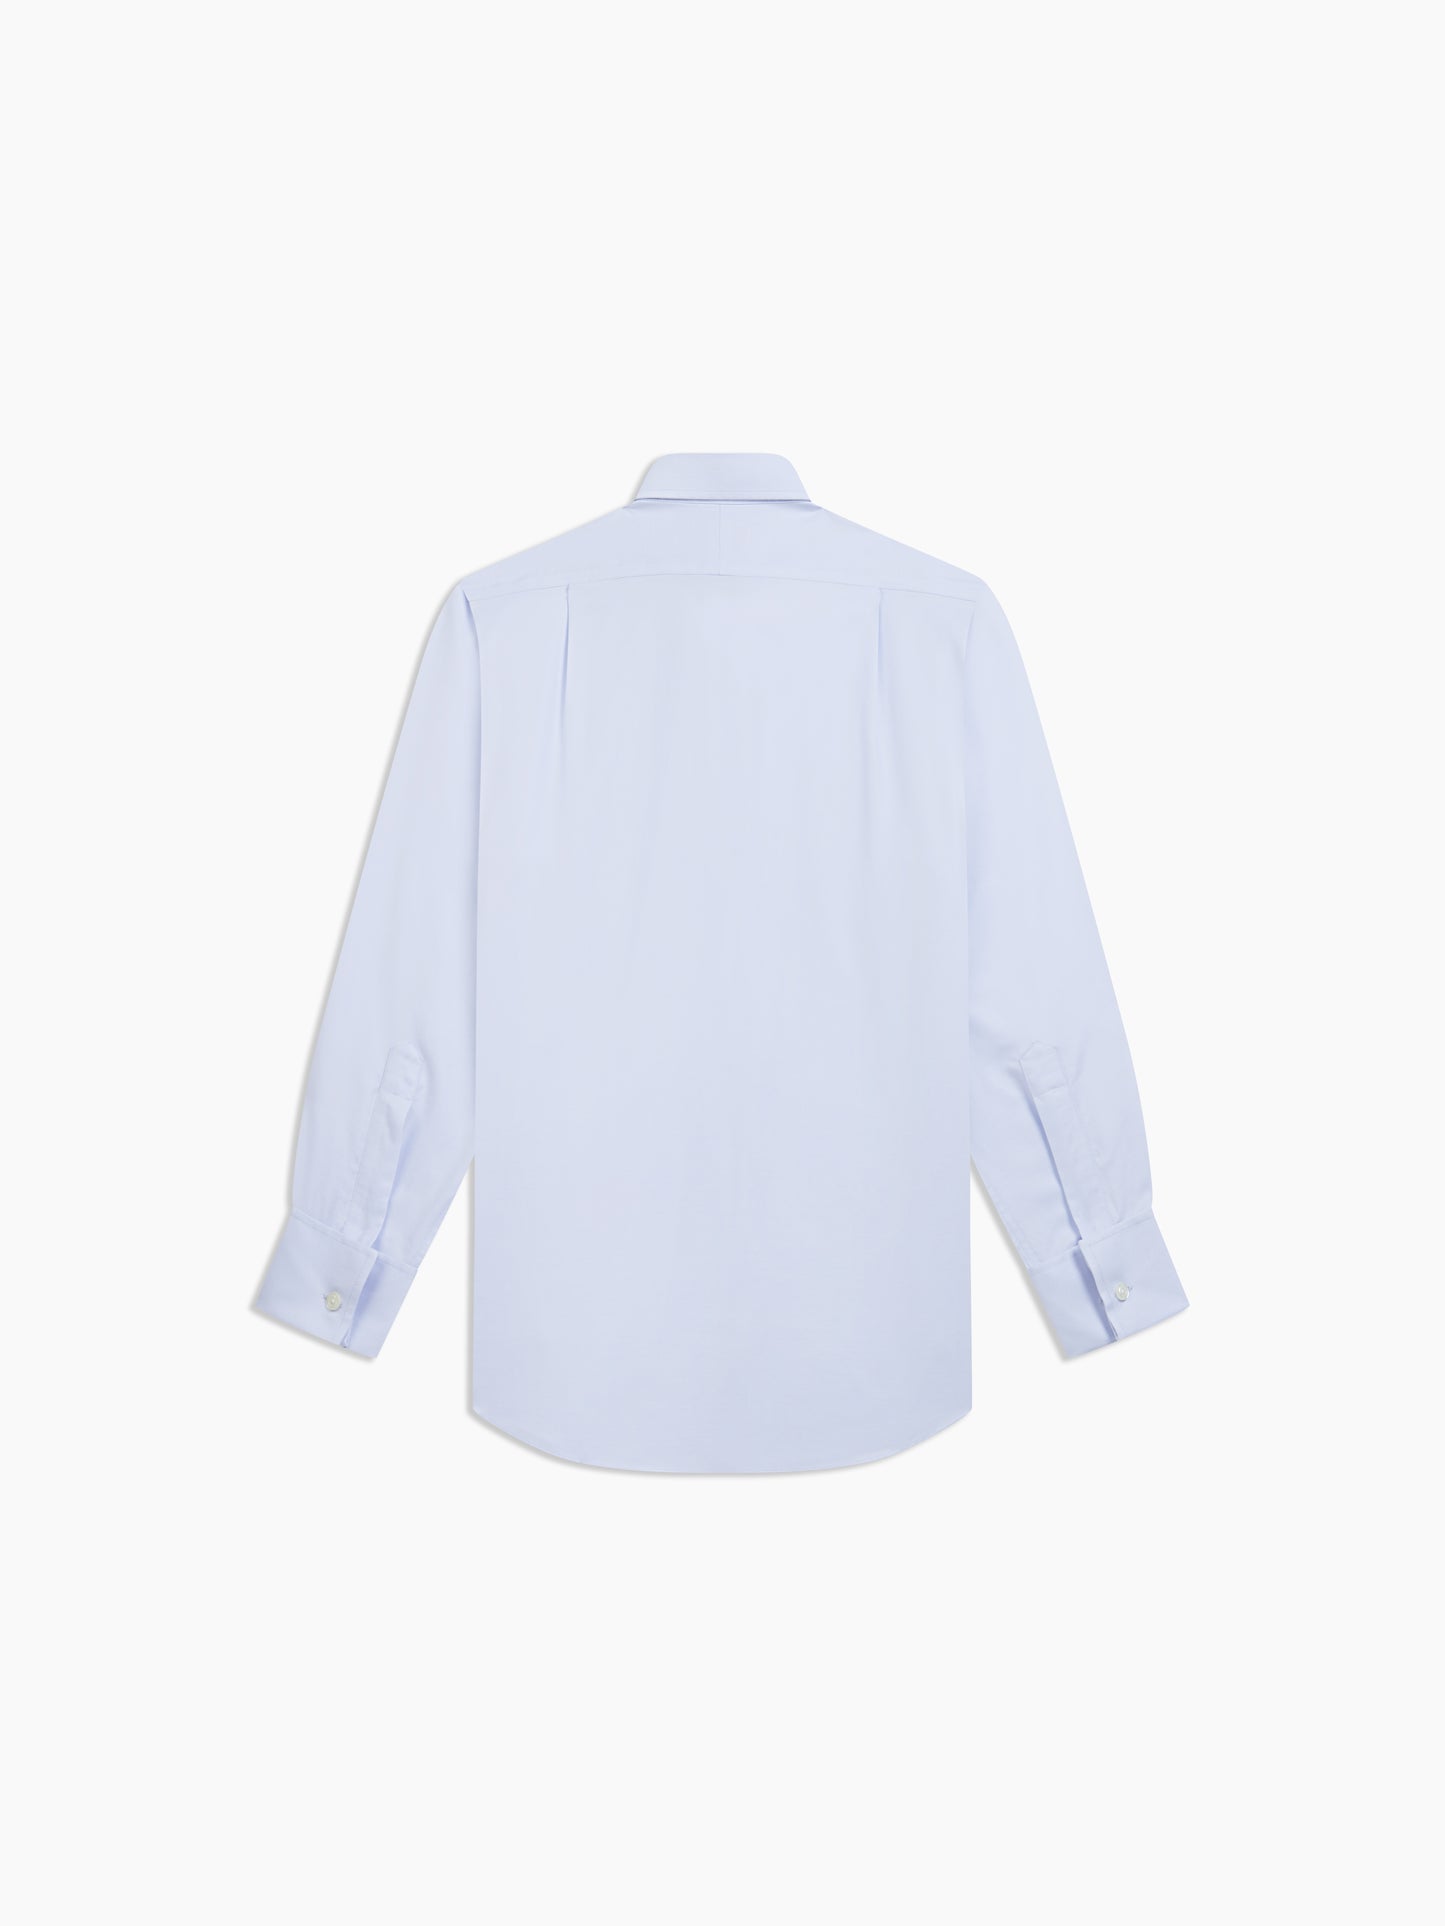 Image 4 of Non-Iron Sky Blue Plain Oxford Regular Fit Duel Cuff Classic Collar Shirt